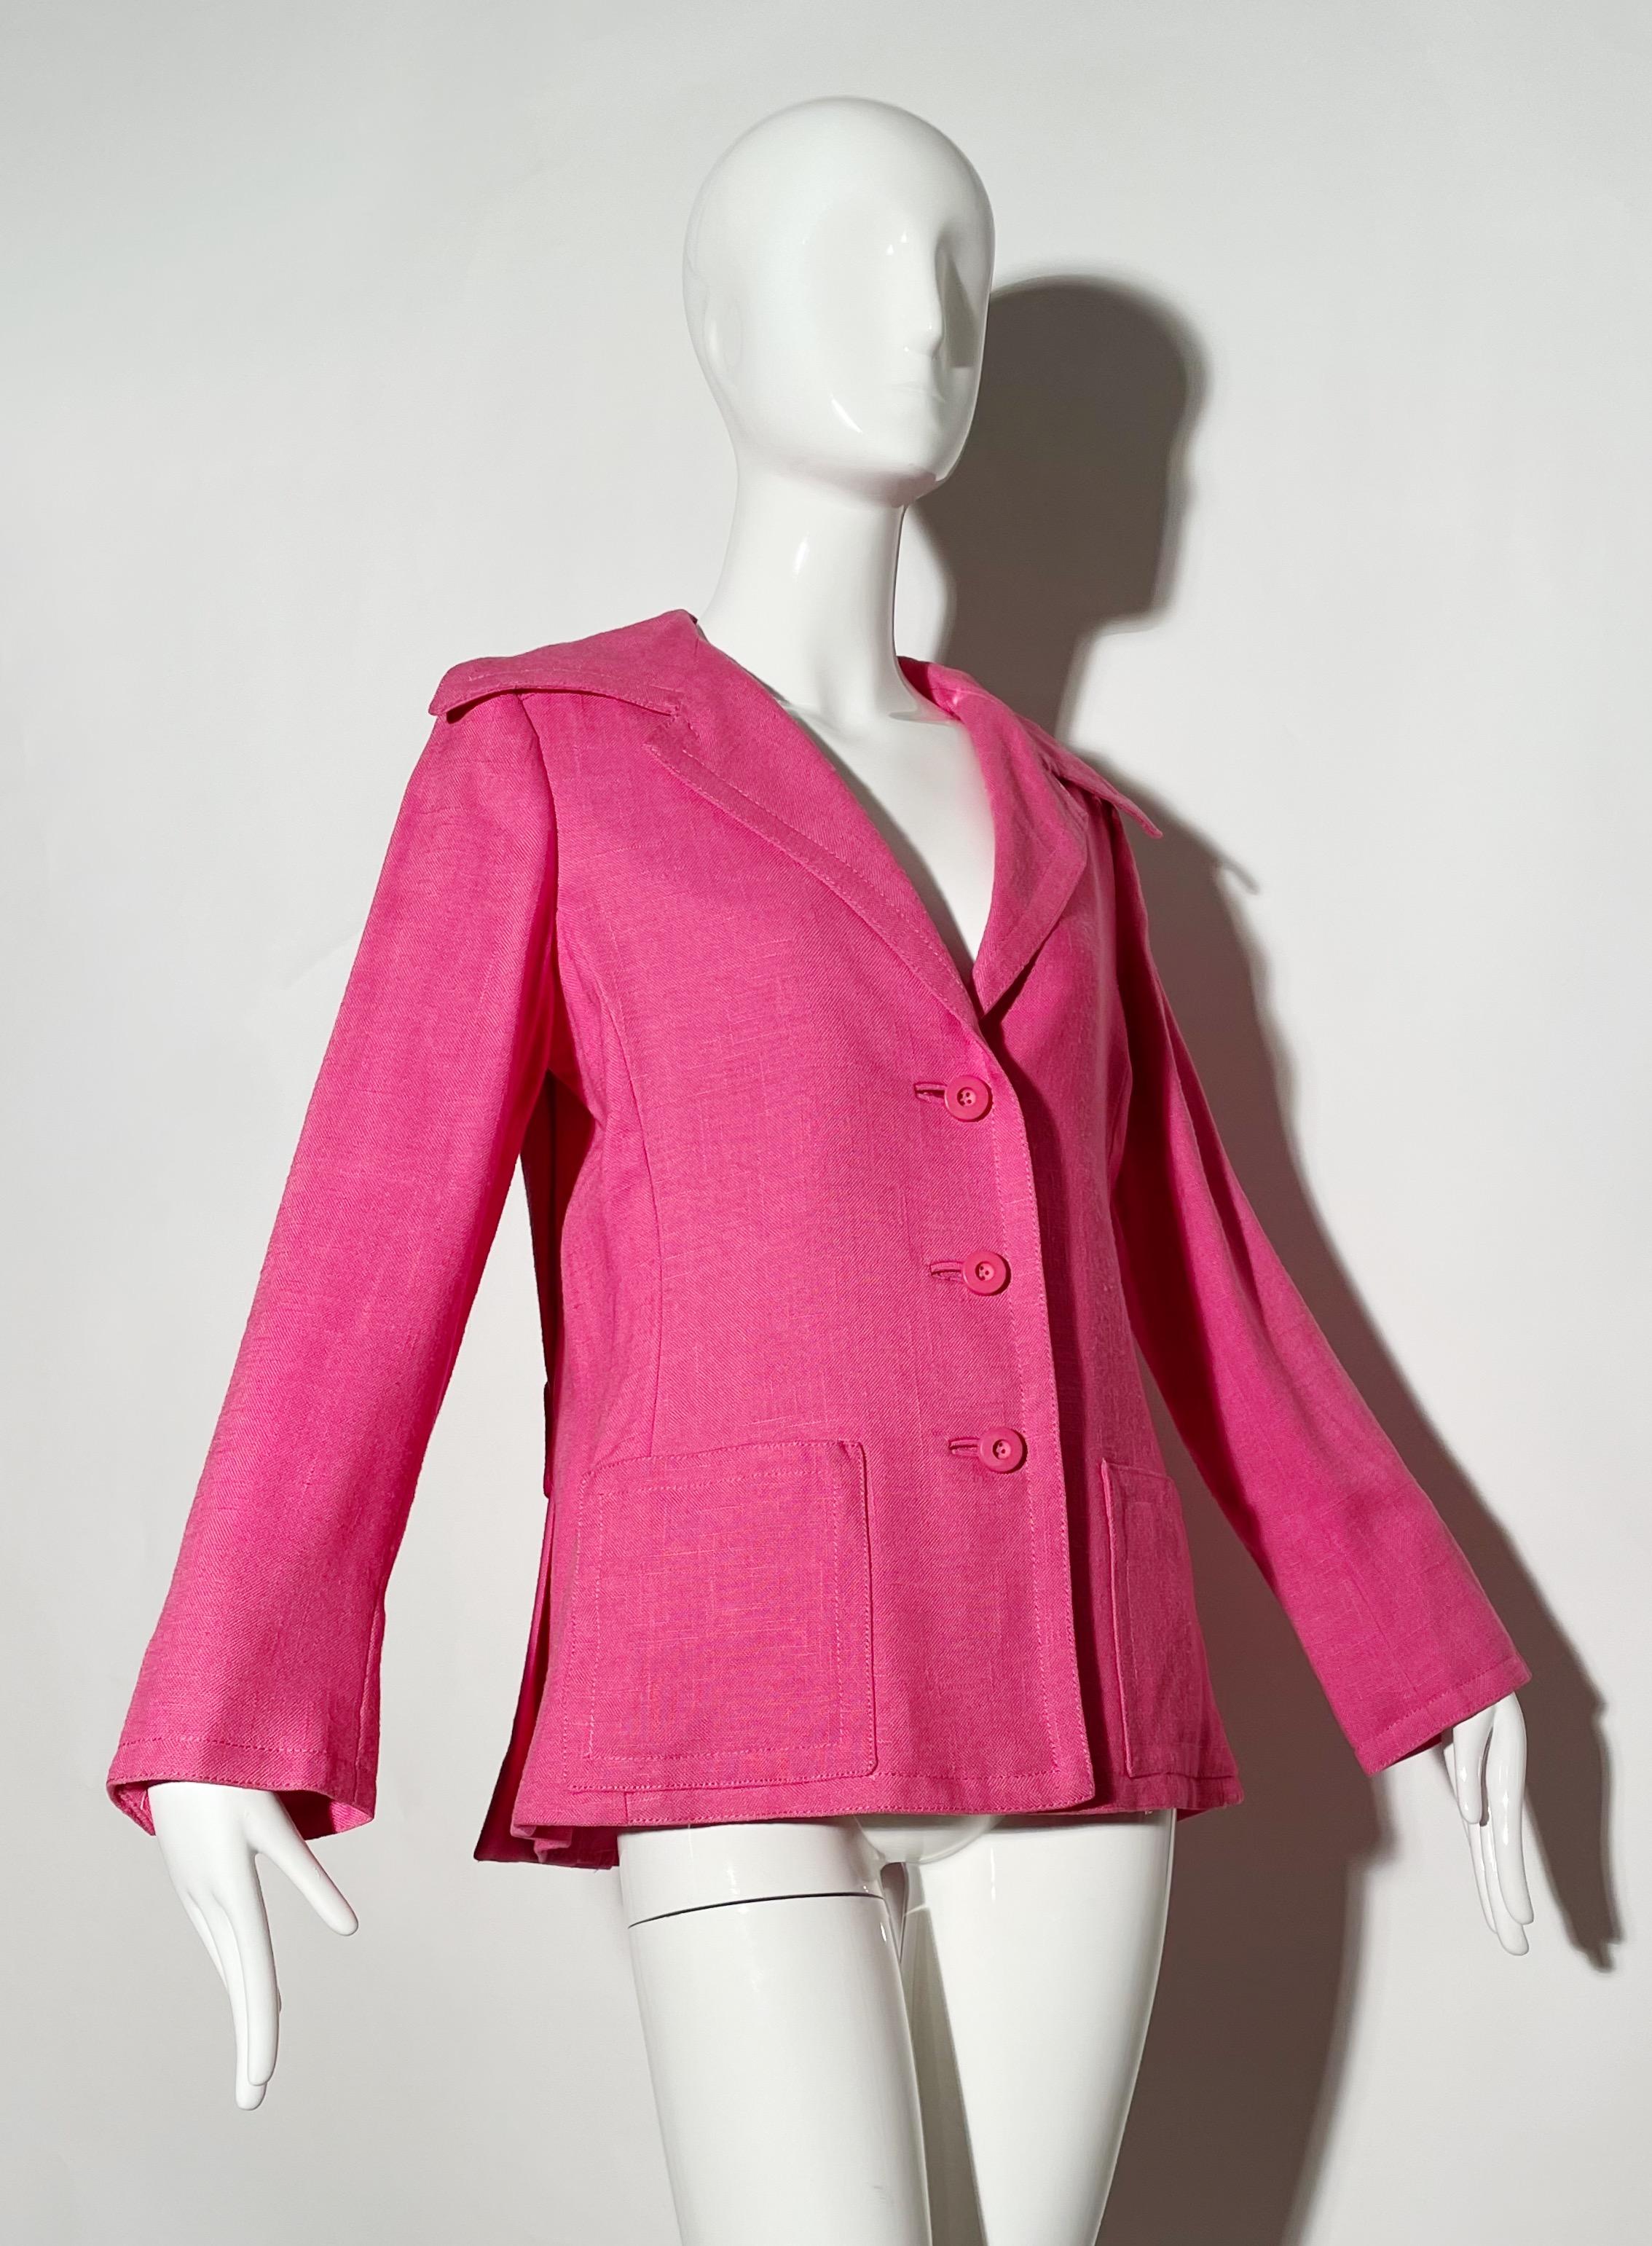 Geoffrey Beene Pink Linen Blazer  In Excellent Condition For Sale In Los Angeles, CA